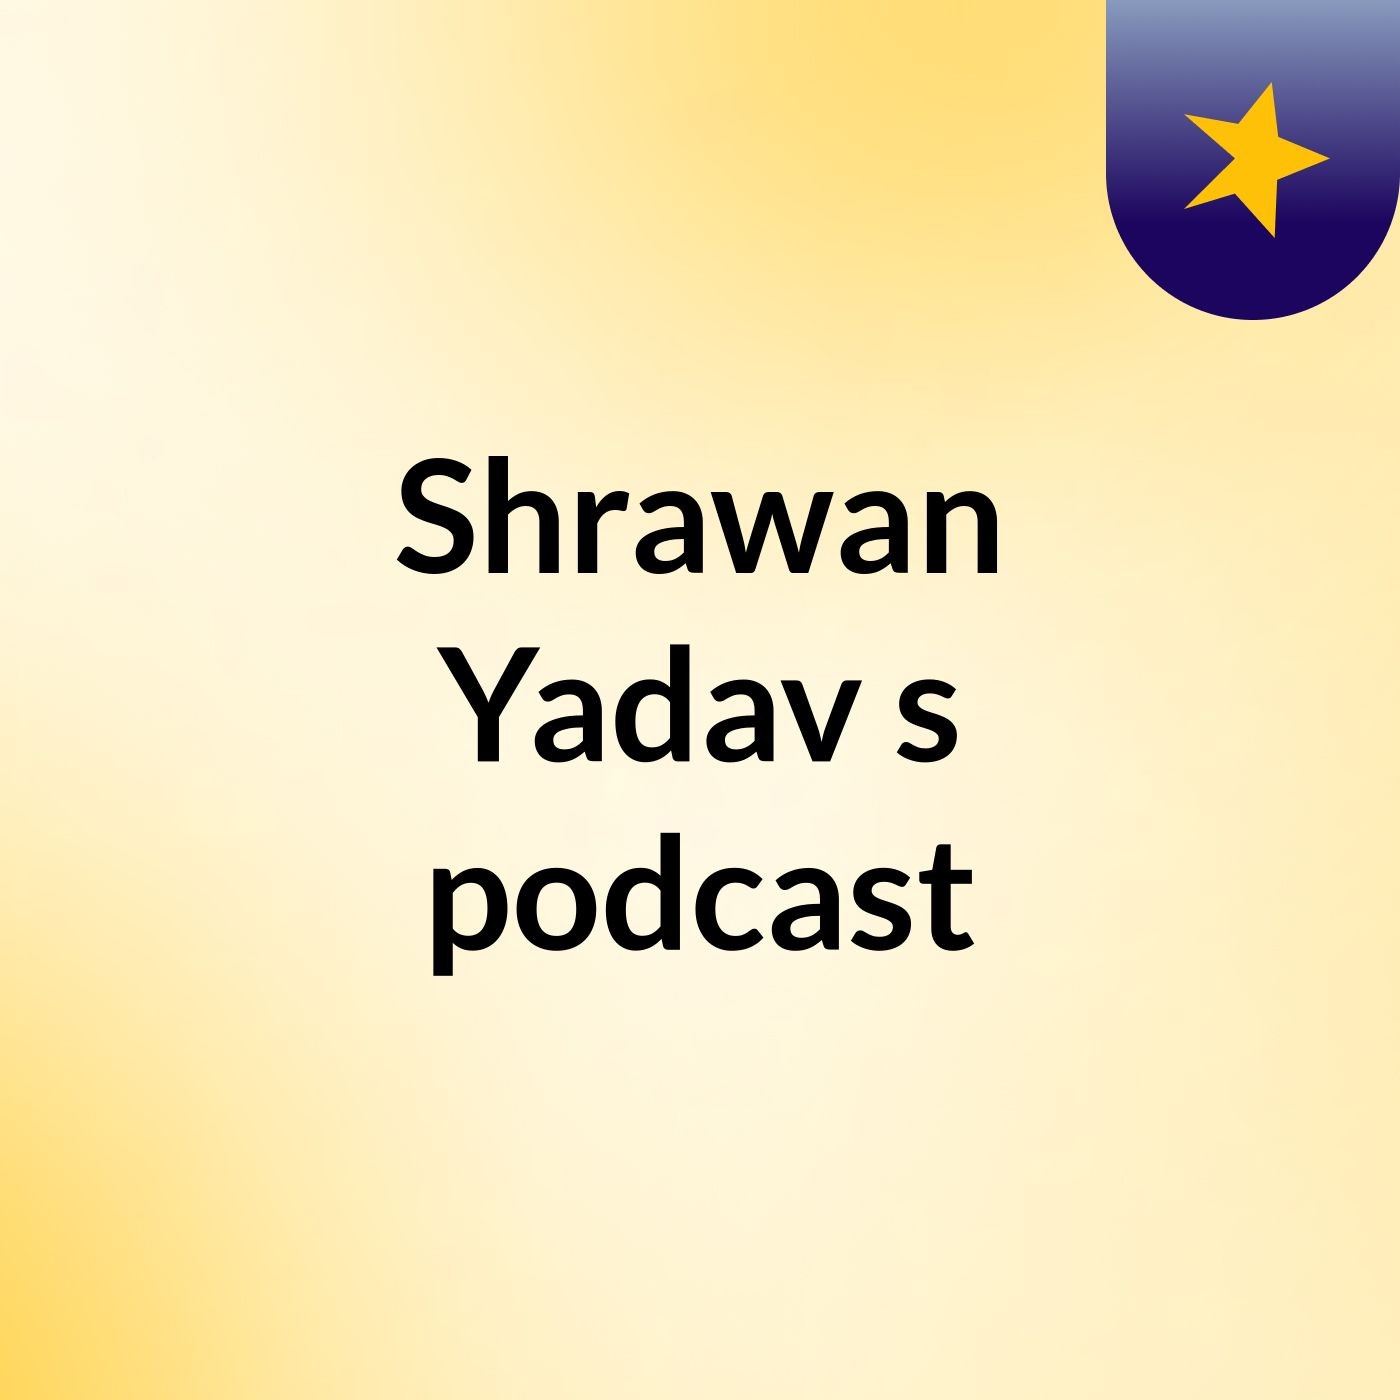 Shrawan Yadav's podcast